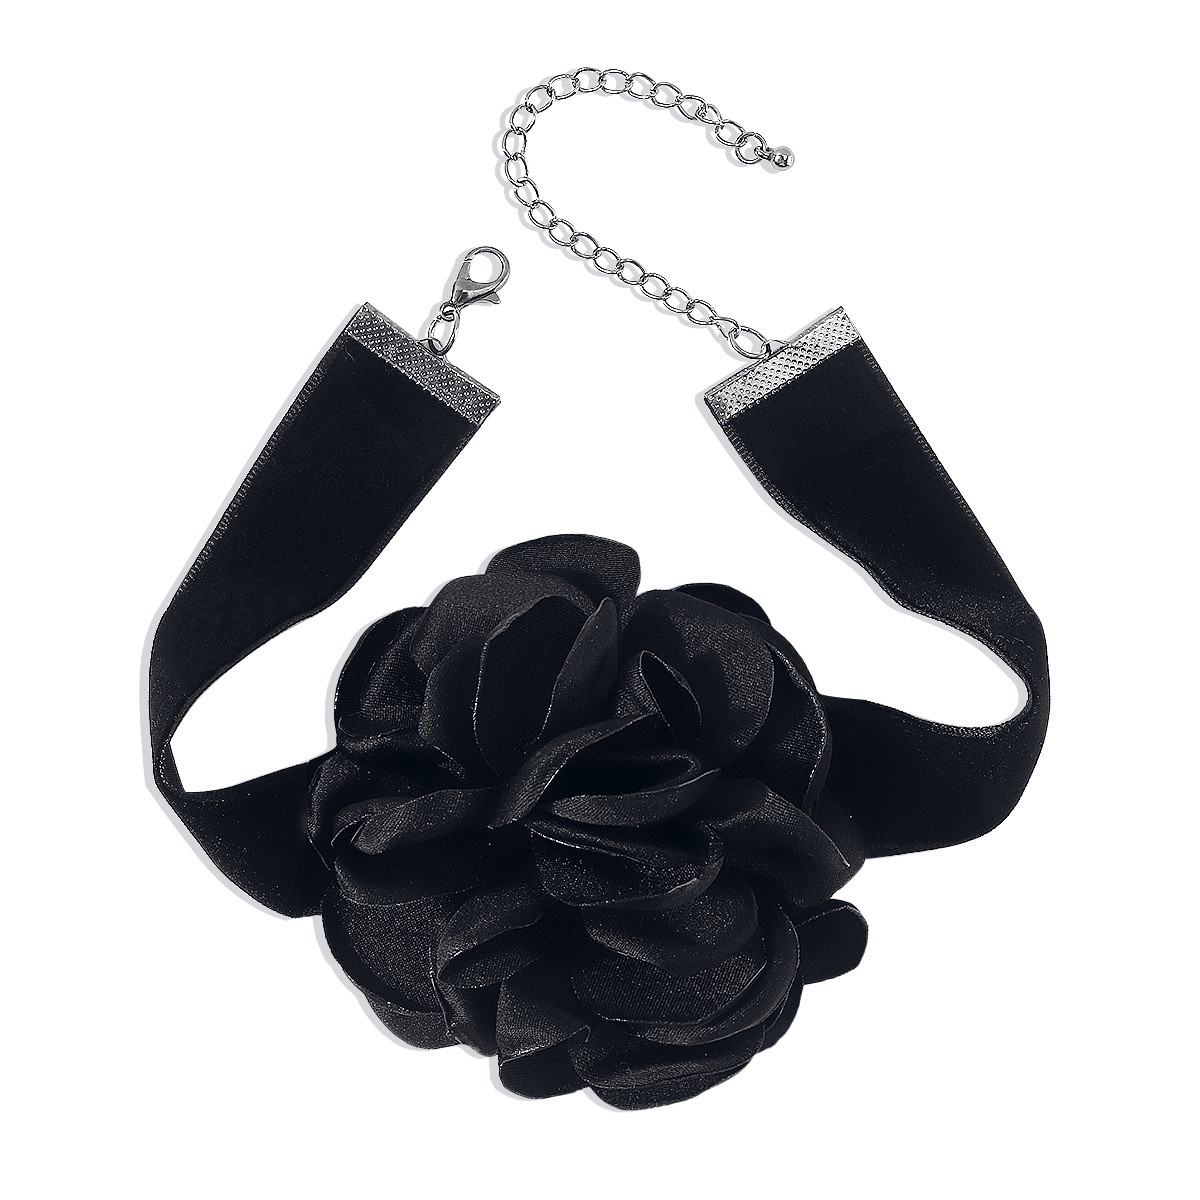 5:Black necklace